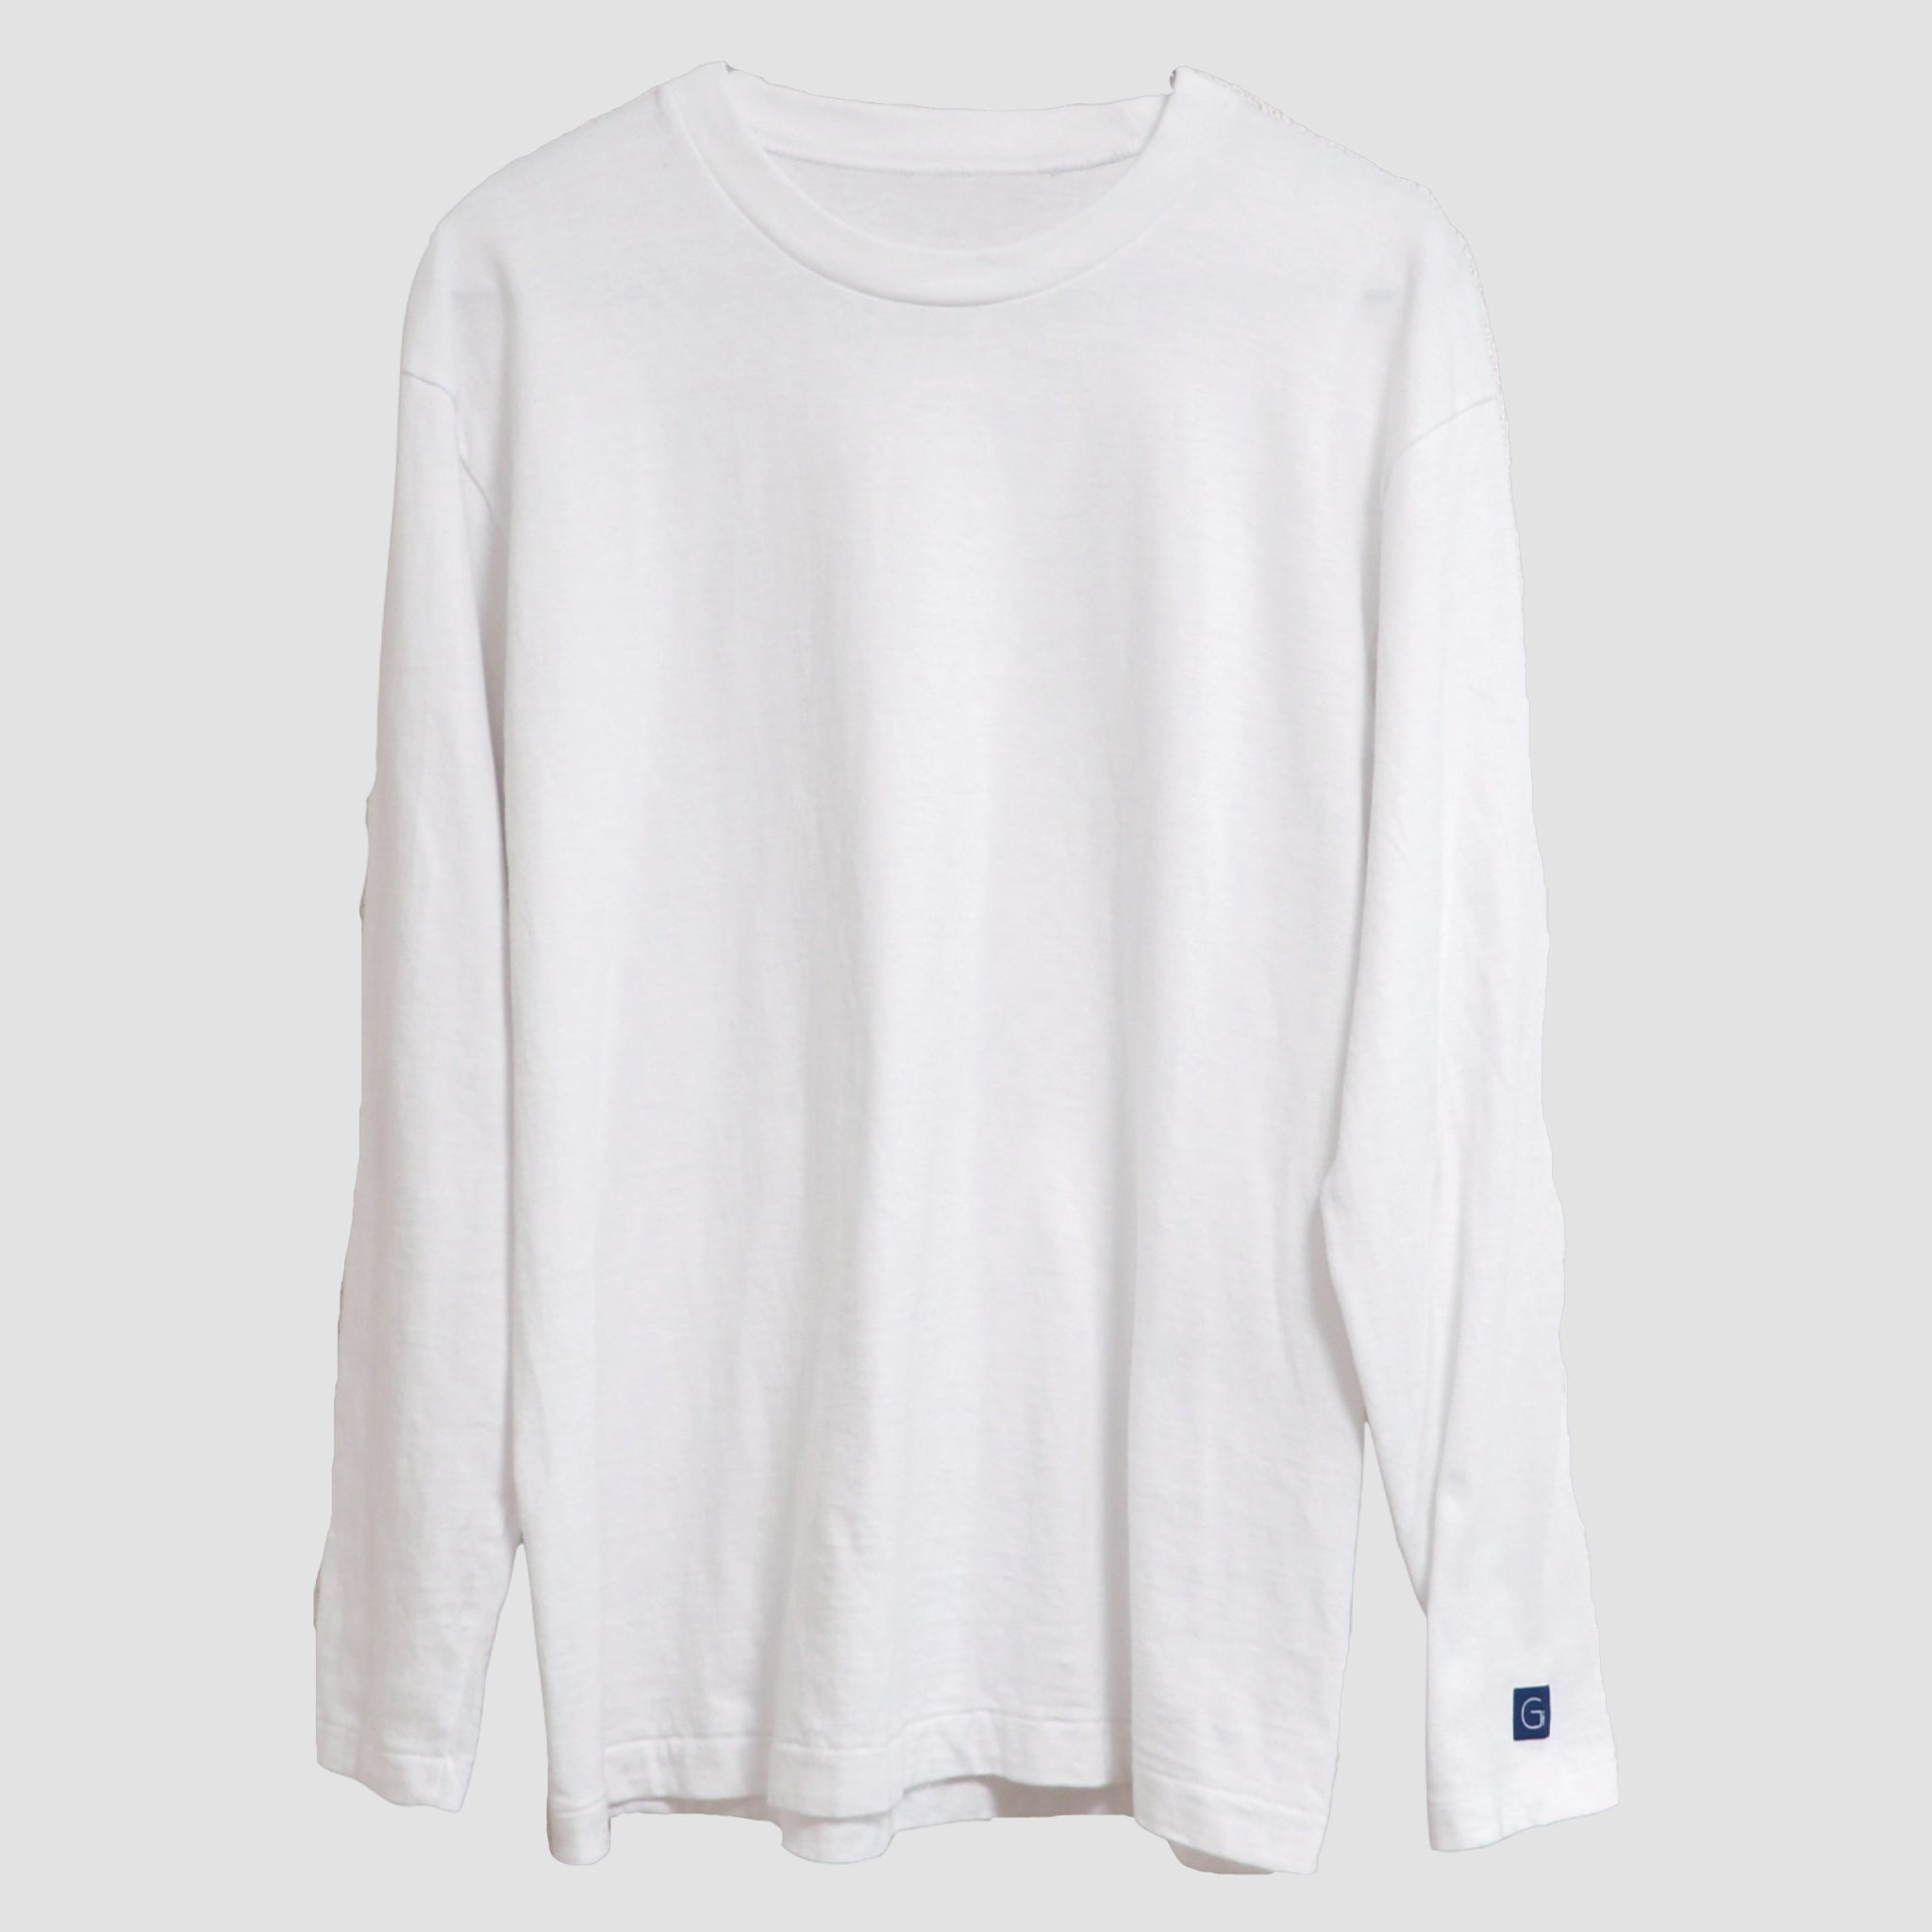 Gi 長袖Tシャツ ロンT 日本製 White 綿100% 国産 在庫限り